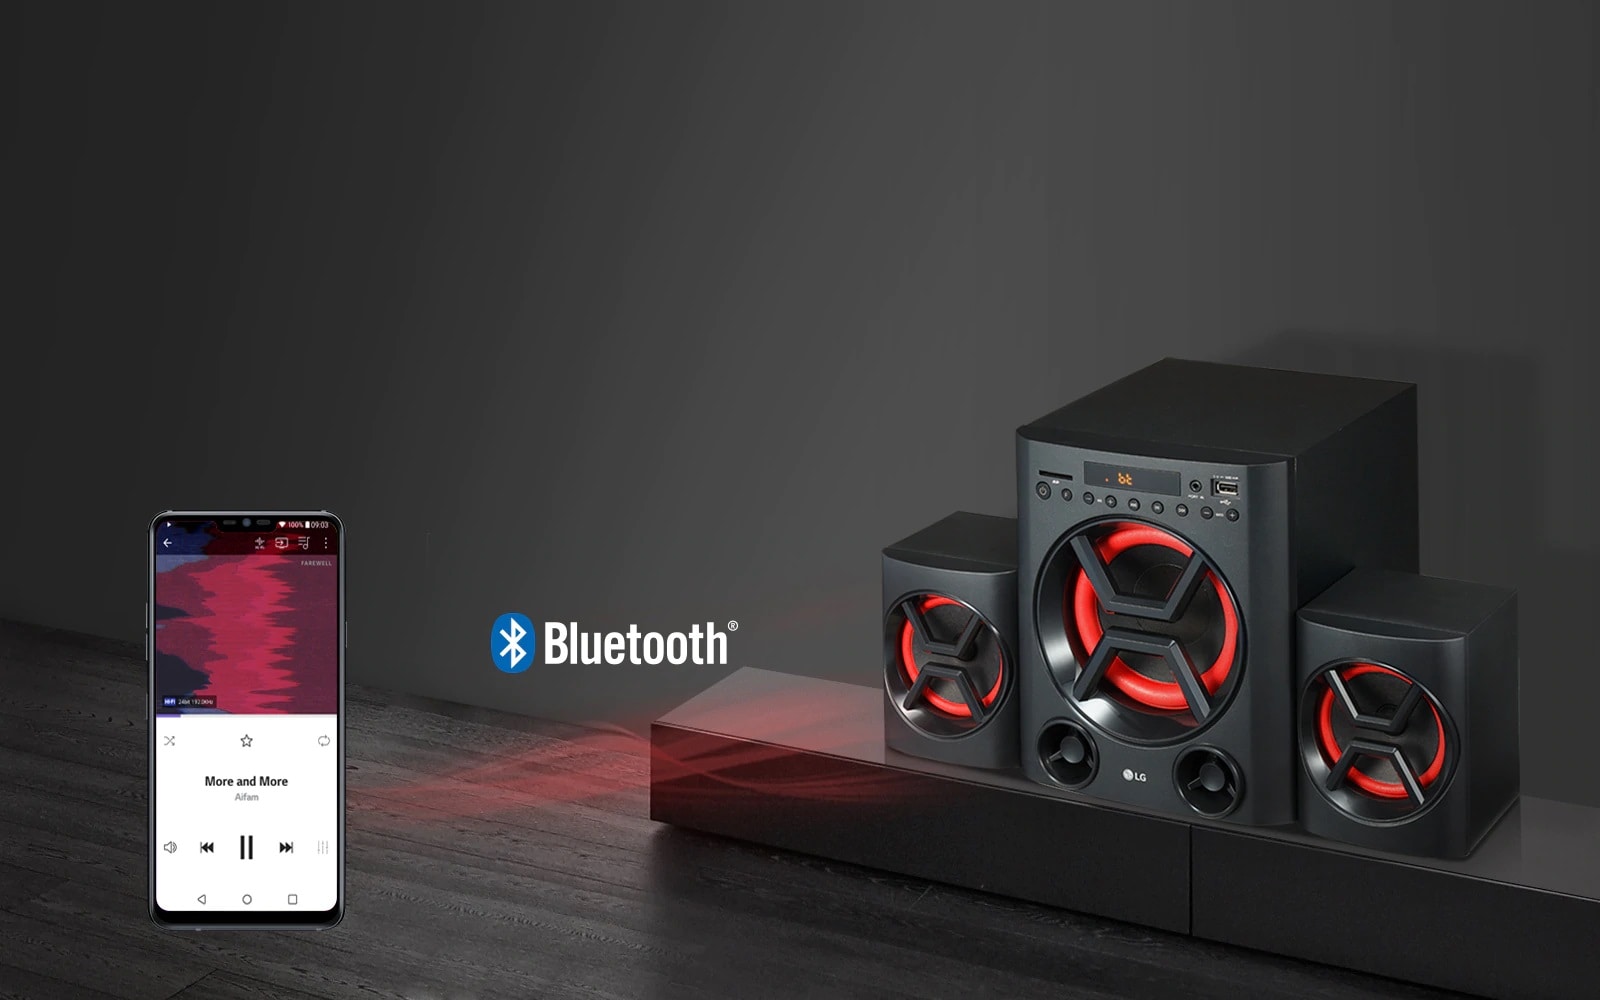 Wireless Audio Streaming via Bluetooth